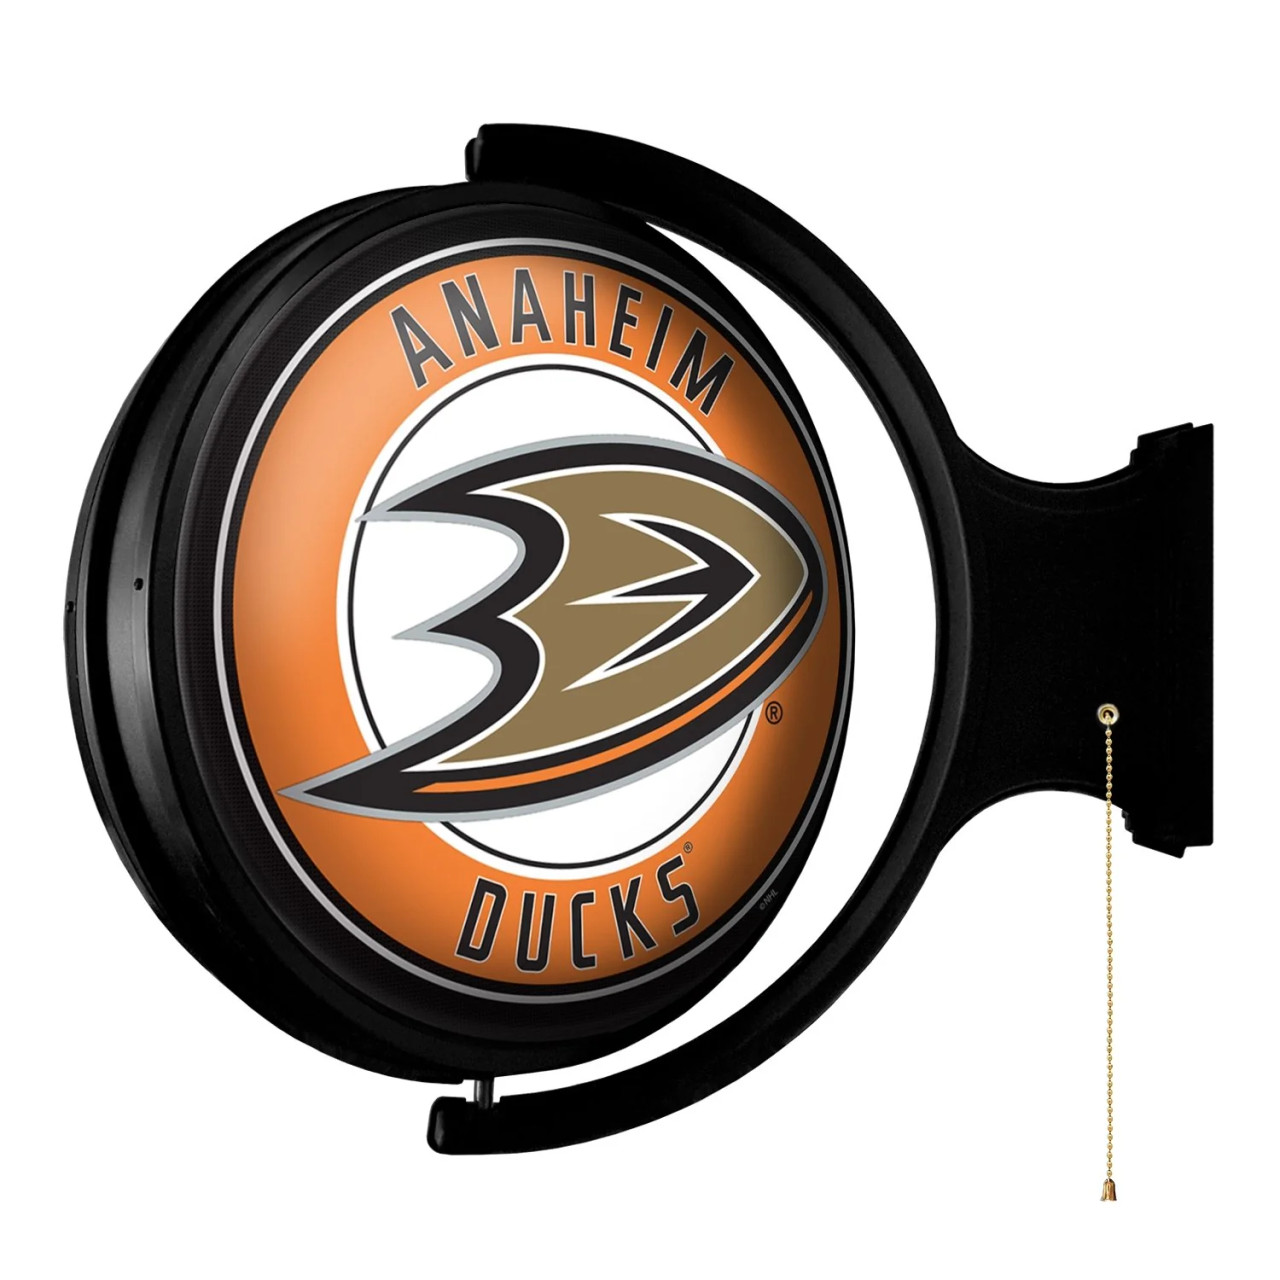 NHANAH-115-01, Anaheim, ANH, ANA, Ducks, Original, Round, Rotating, Lighted, Wall, Sign, NHANAH-115-01, NHL, The Fan-Brand, 686082114134